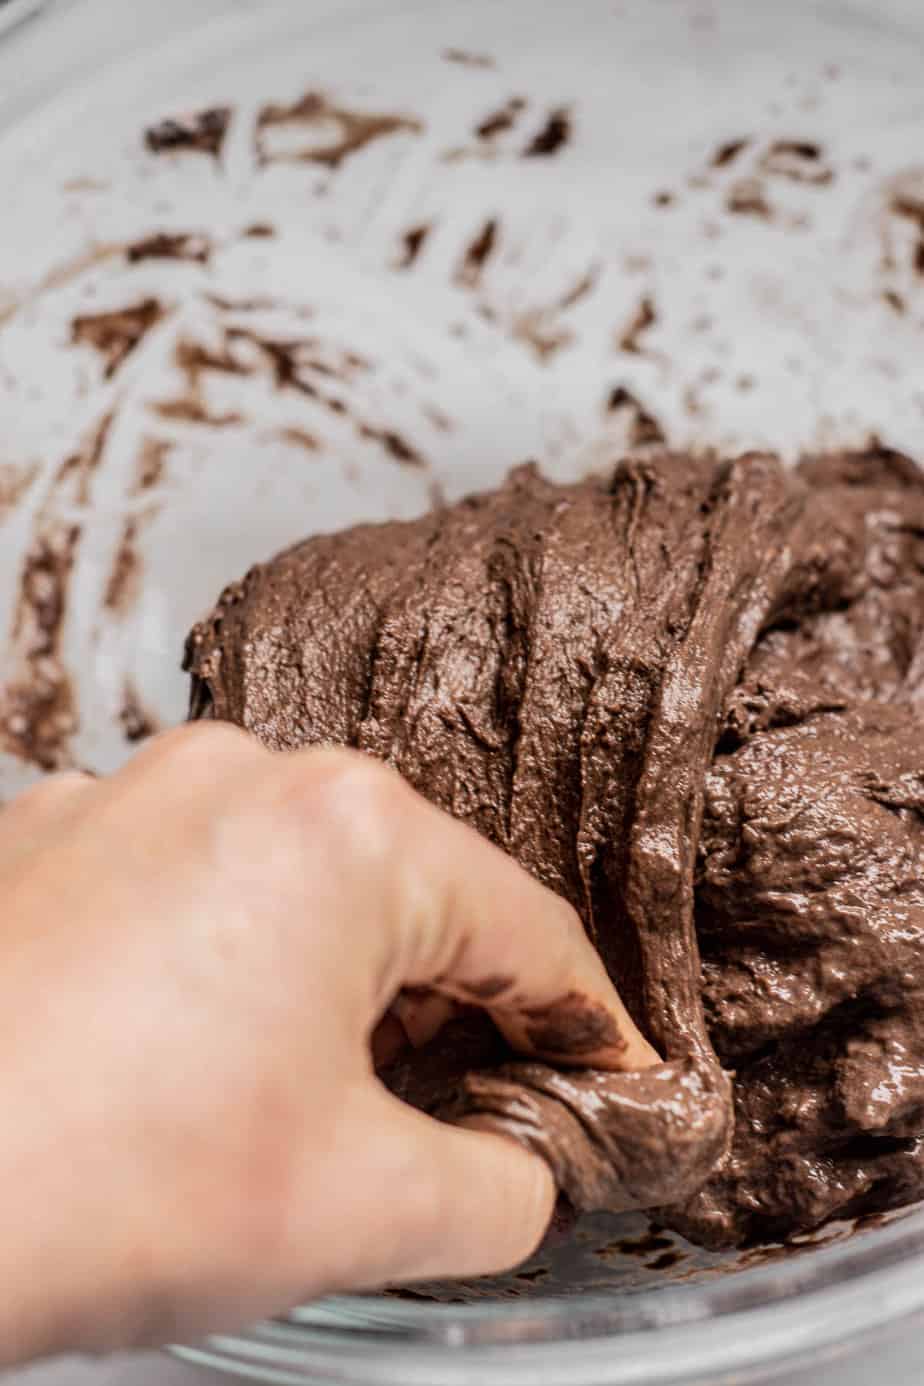 a hand folding chocolate dough.